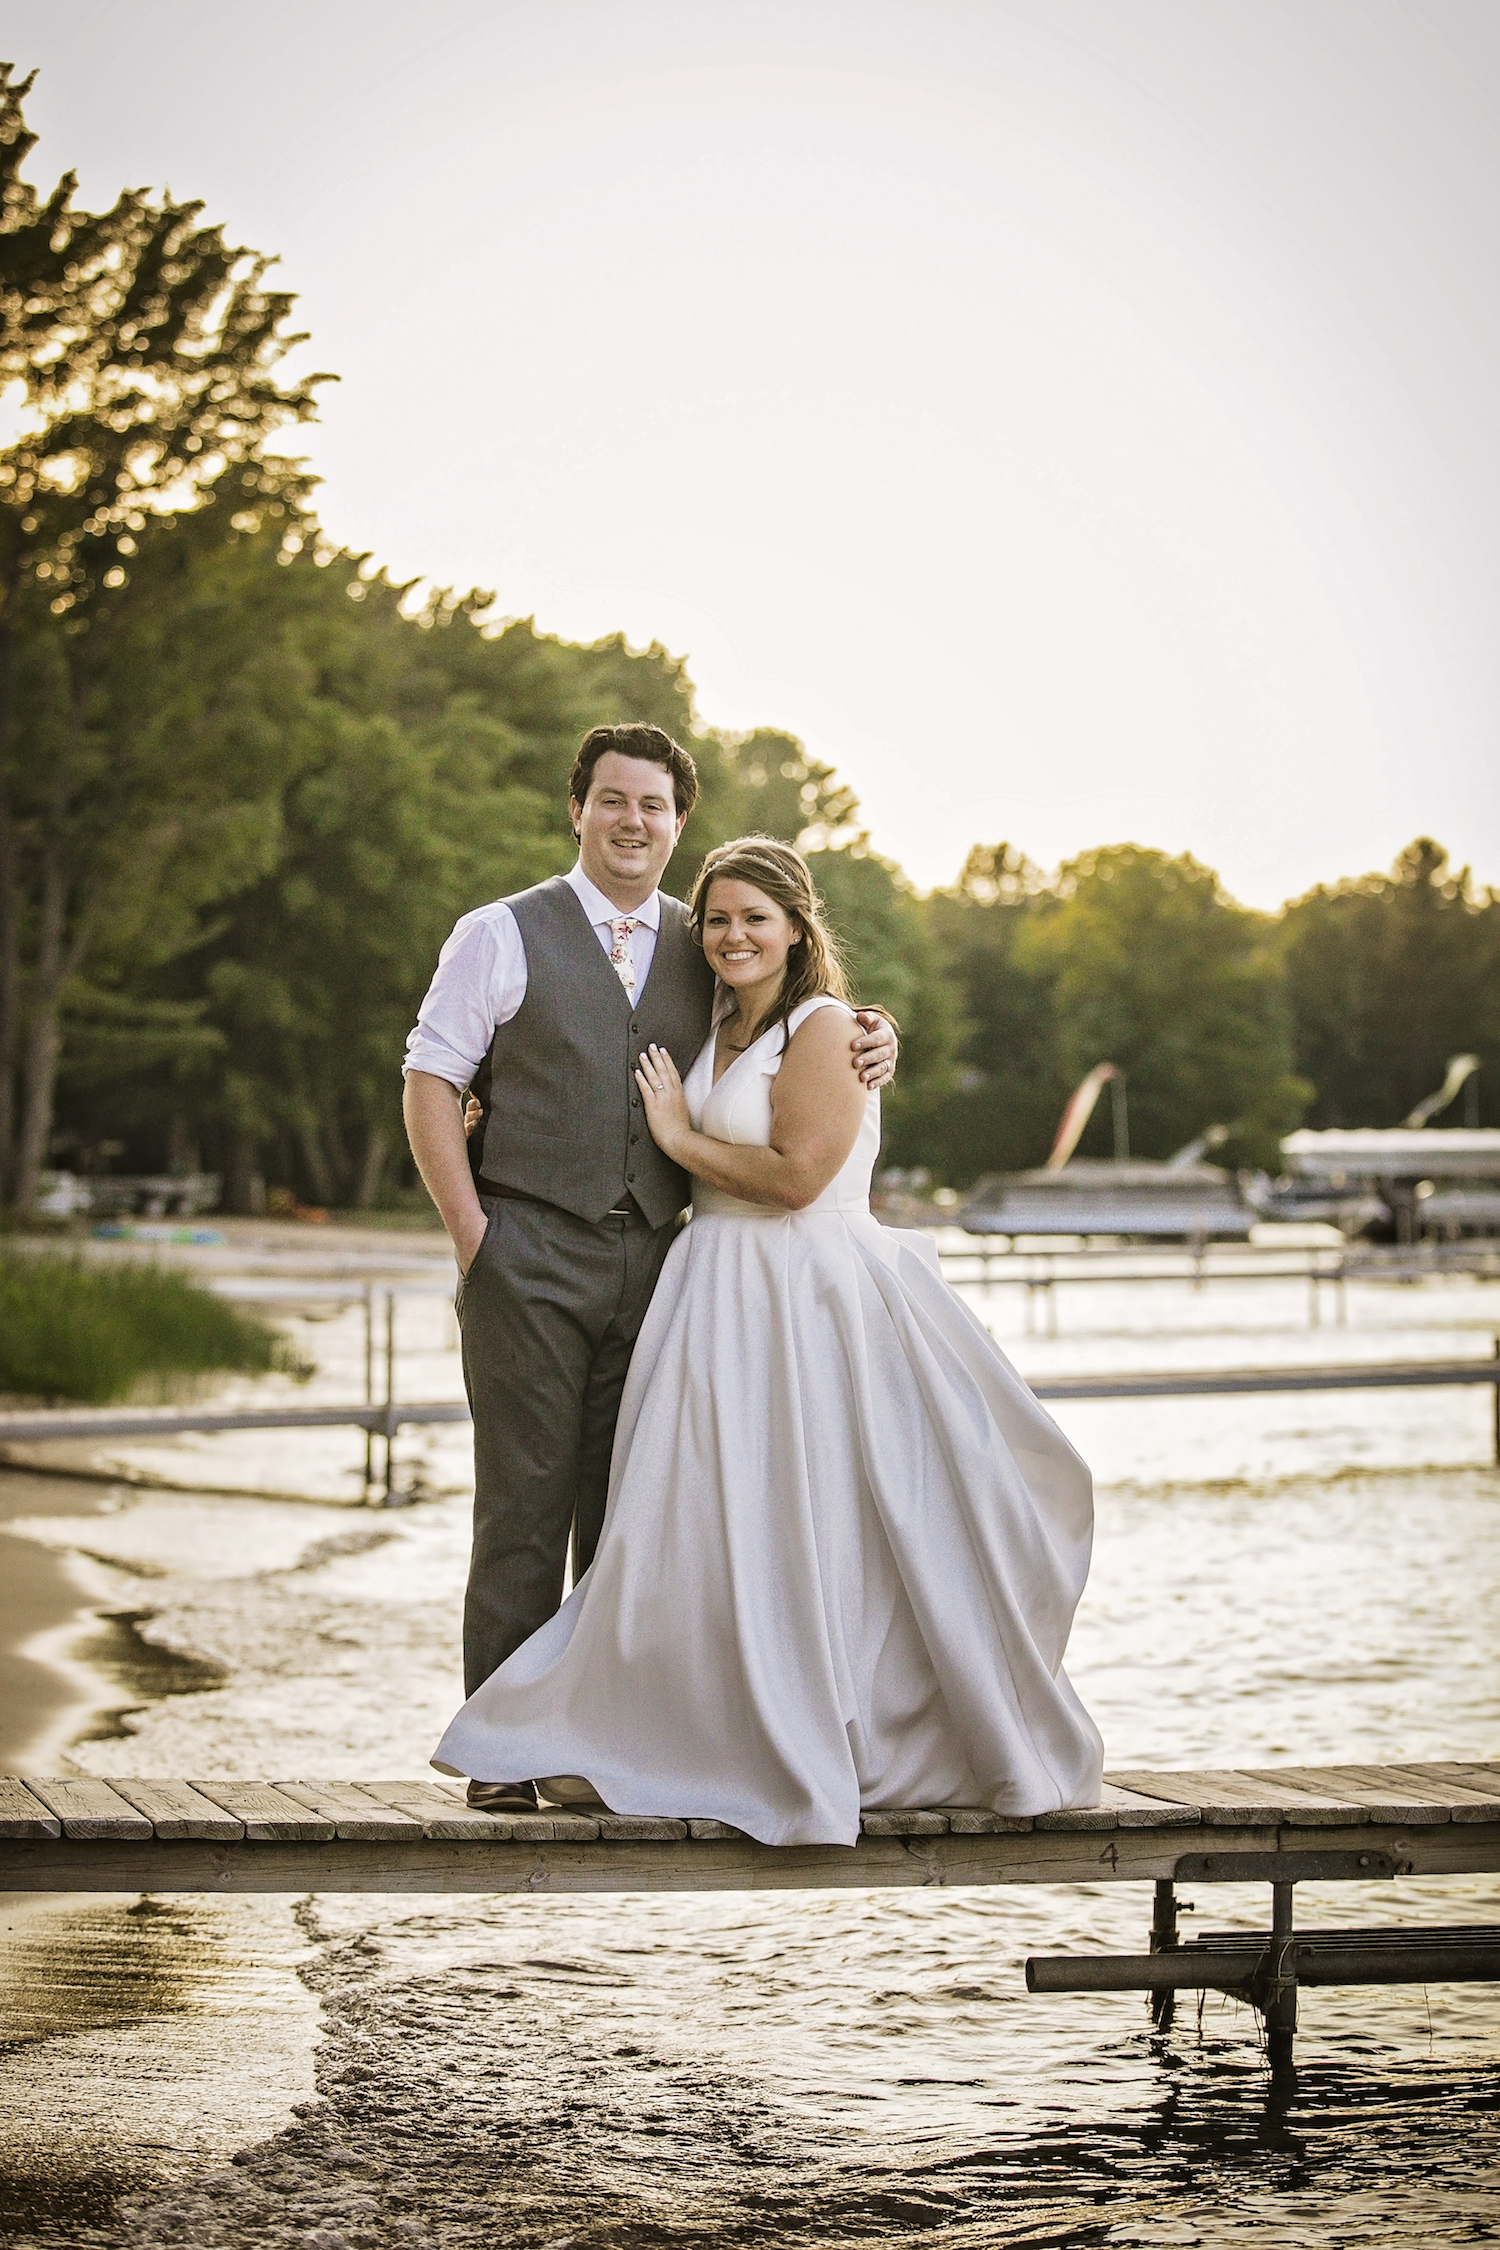 Bride and groom standing on lake dock